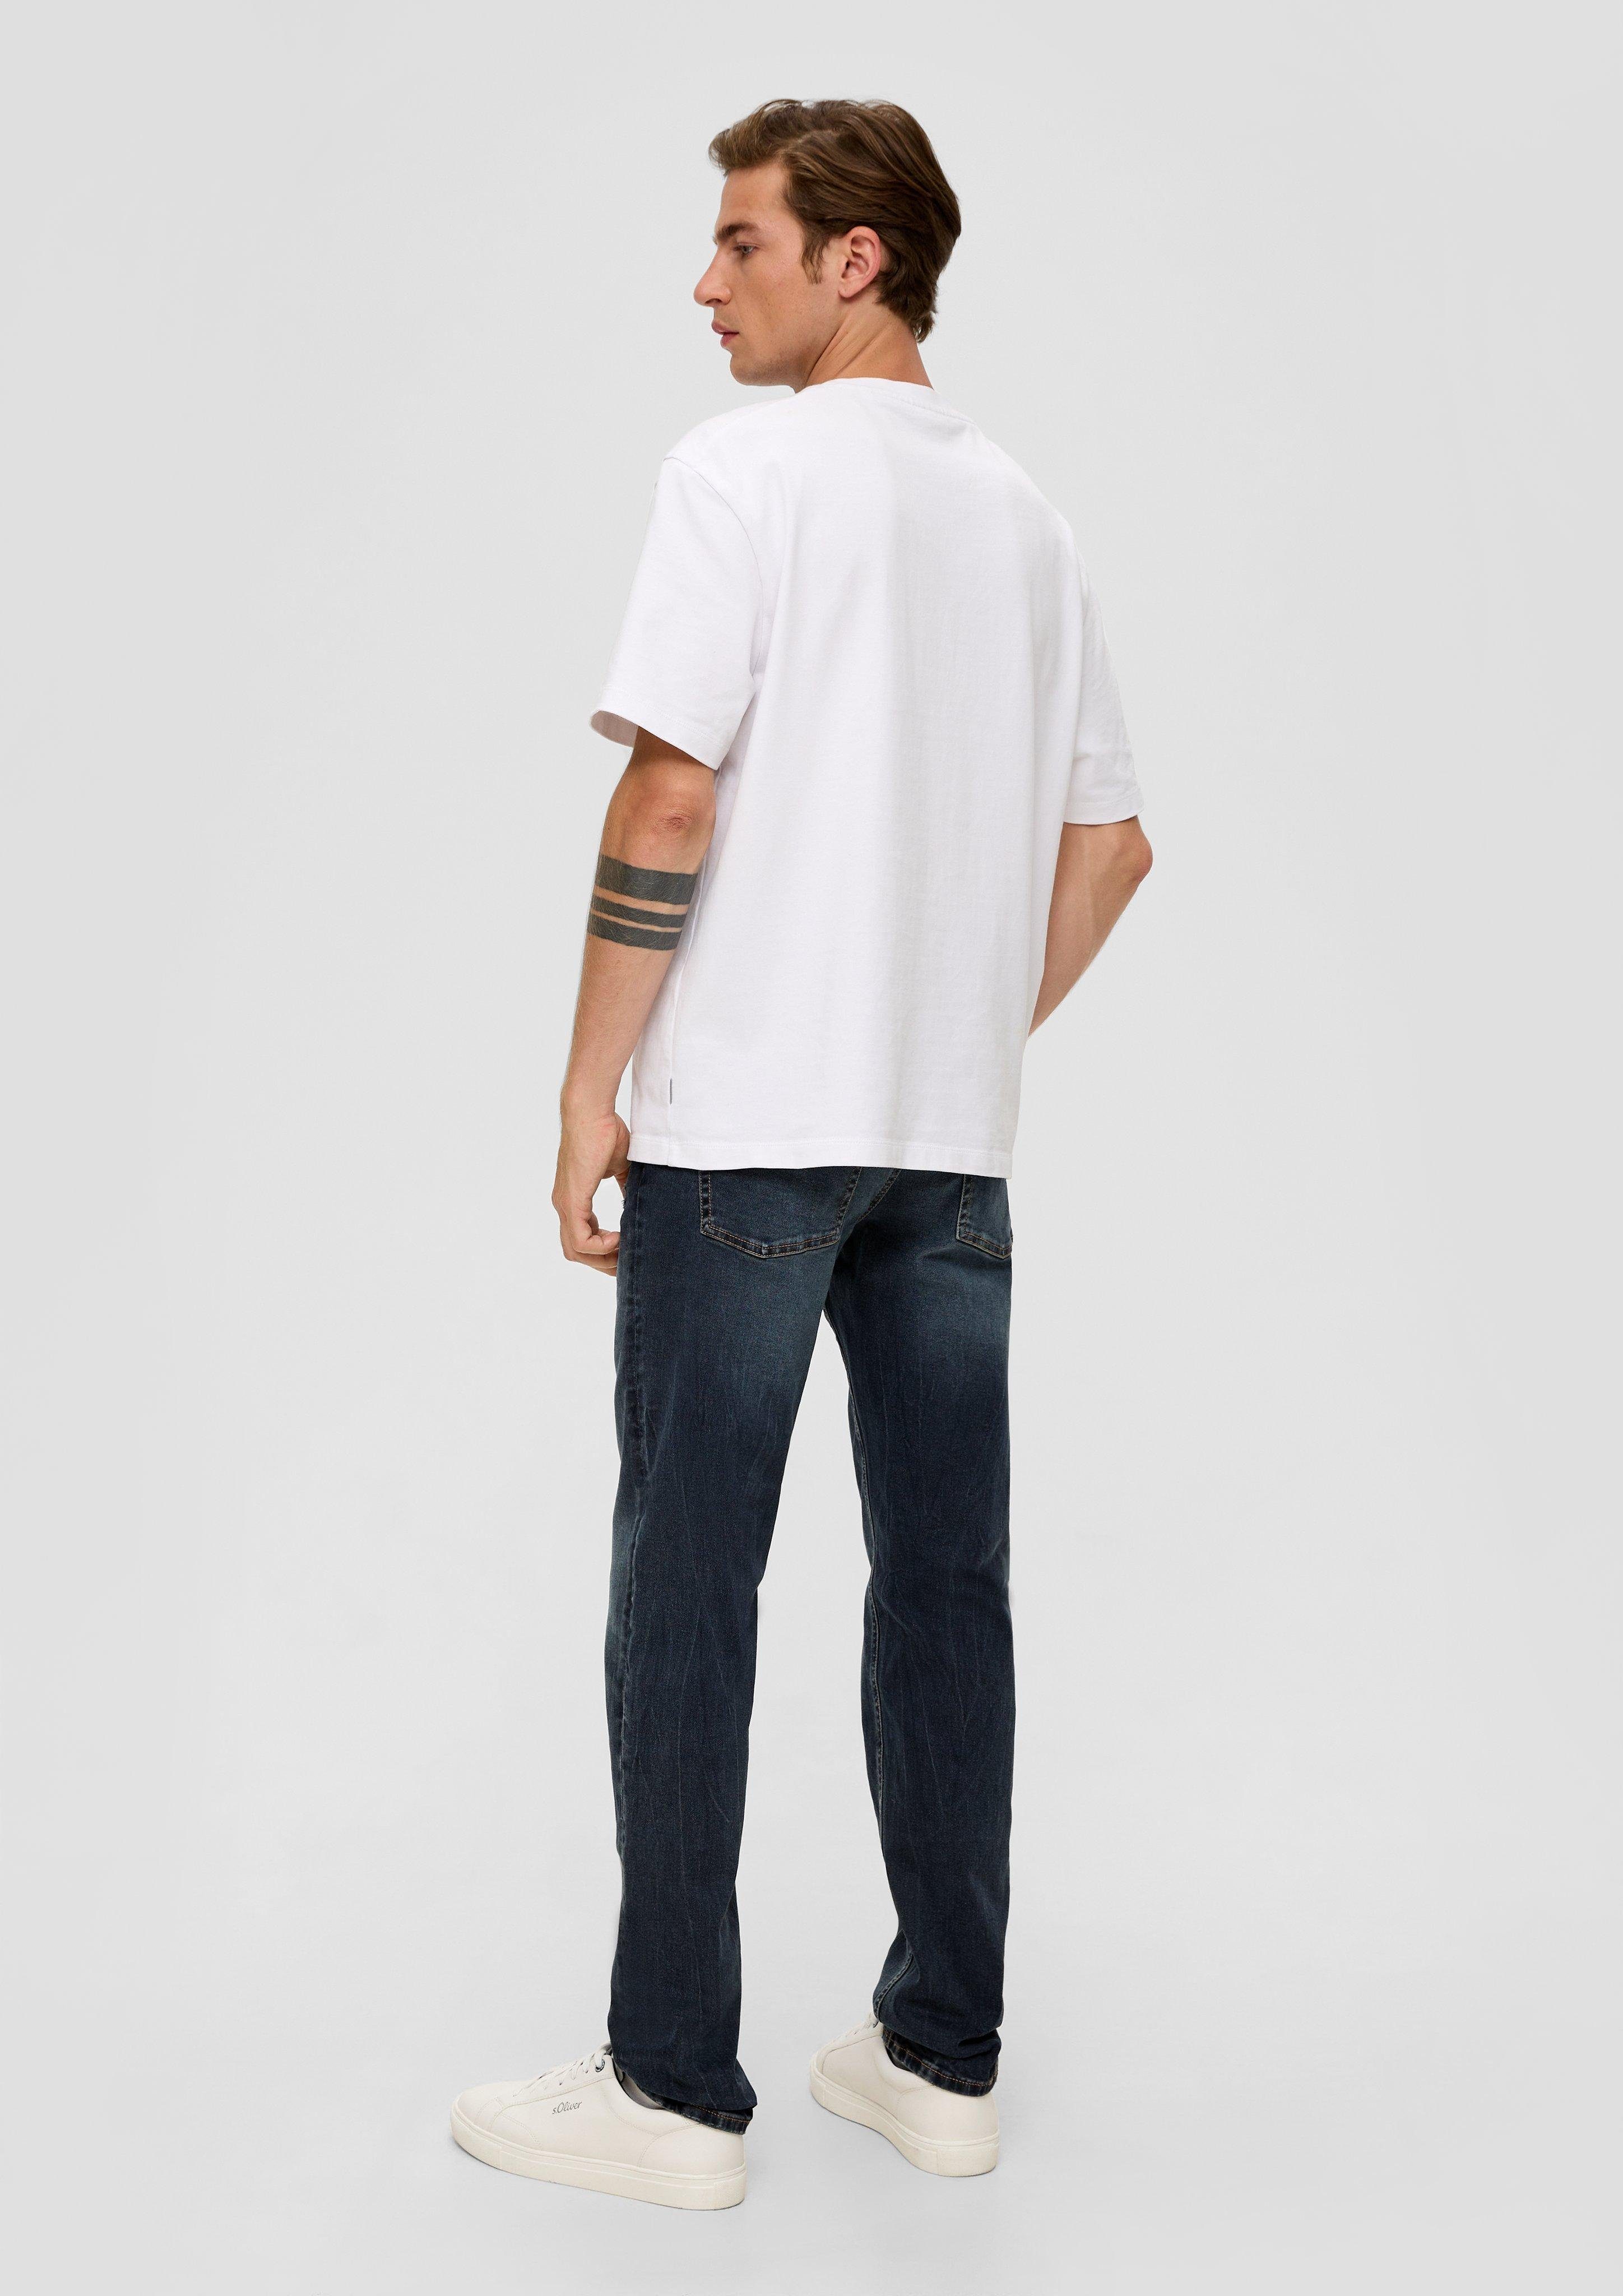 Jeans Leg s.Oliver dunkelblau Slim Fit Mid / Label-Patch, / Stoffhose Nelio Slim Rise Destroyes /